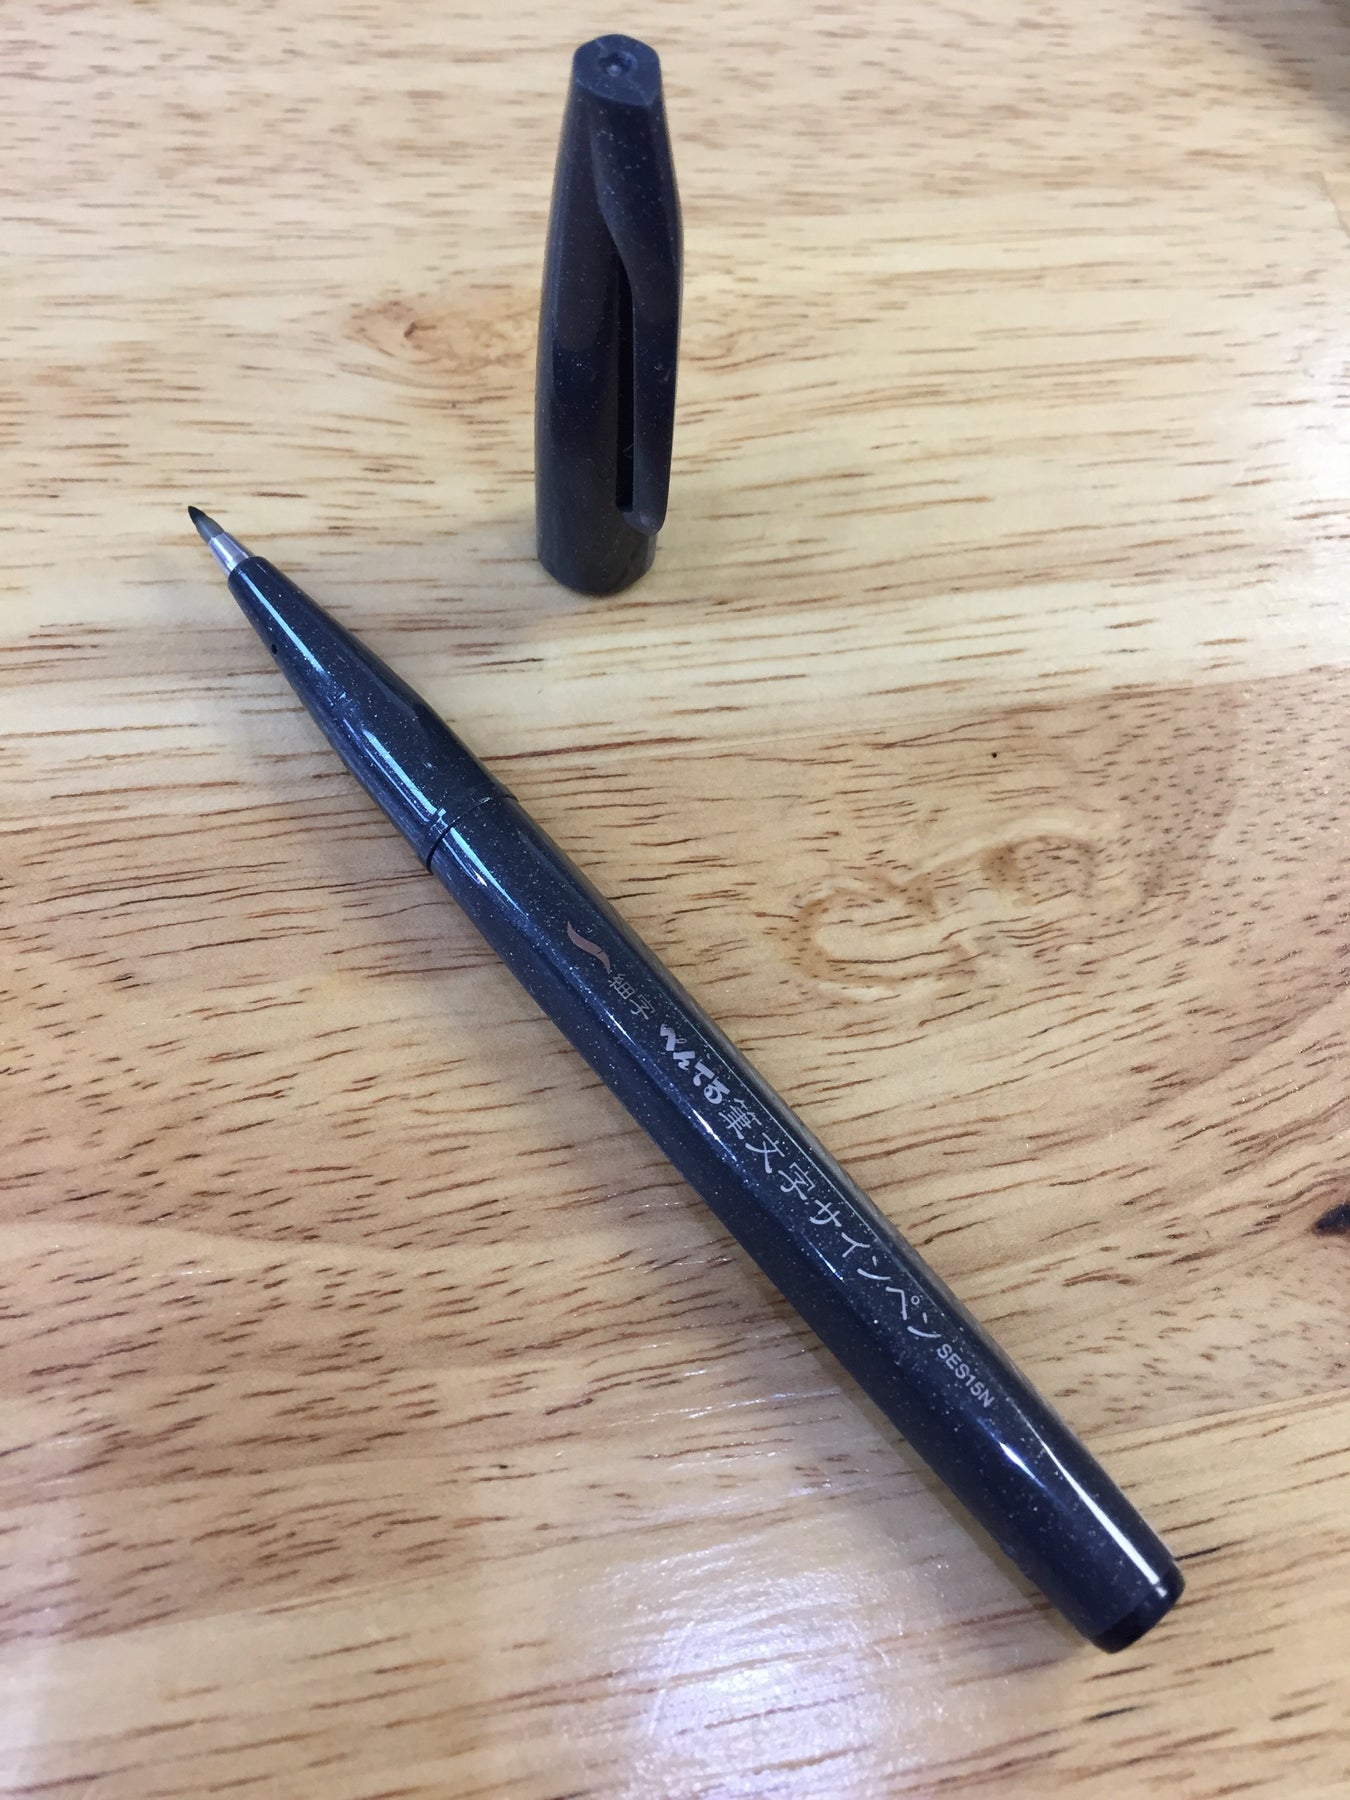 Pentel XSES15C-18ST Brush Touch Sign Pen, Set of 18 Colors - Yahoo Shopping